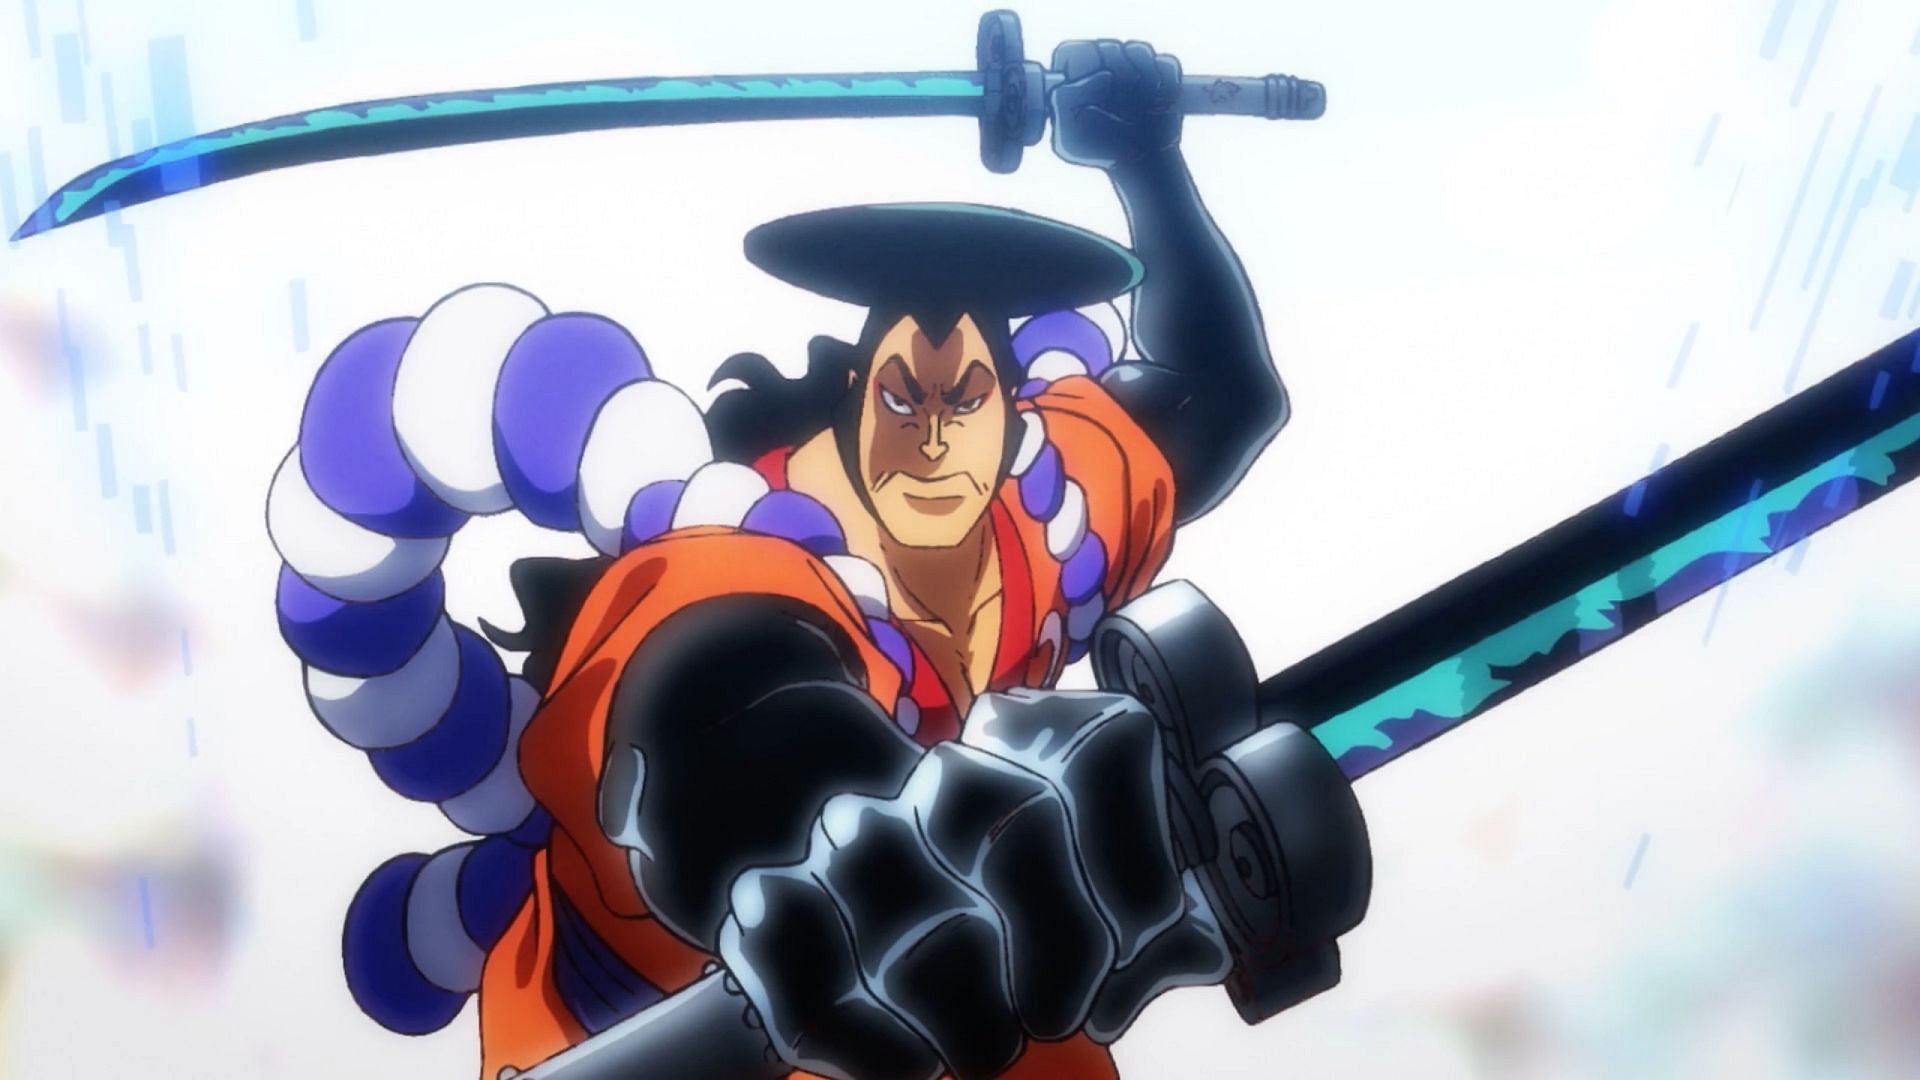 Oden (Image via Toei Animation, One Piece)